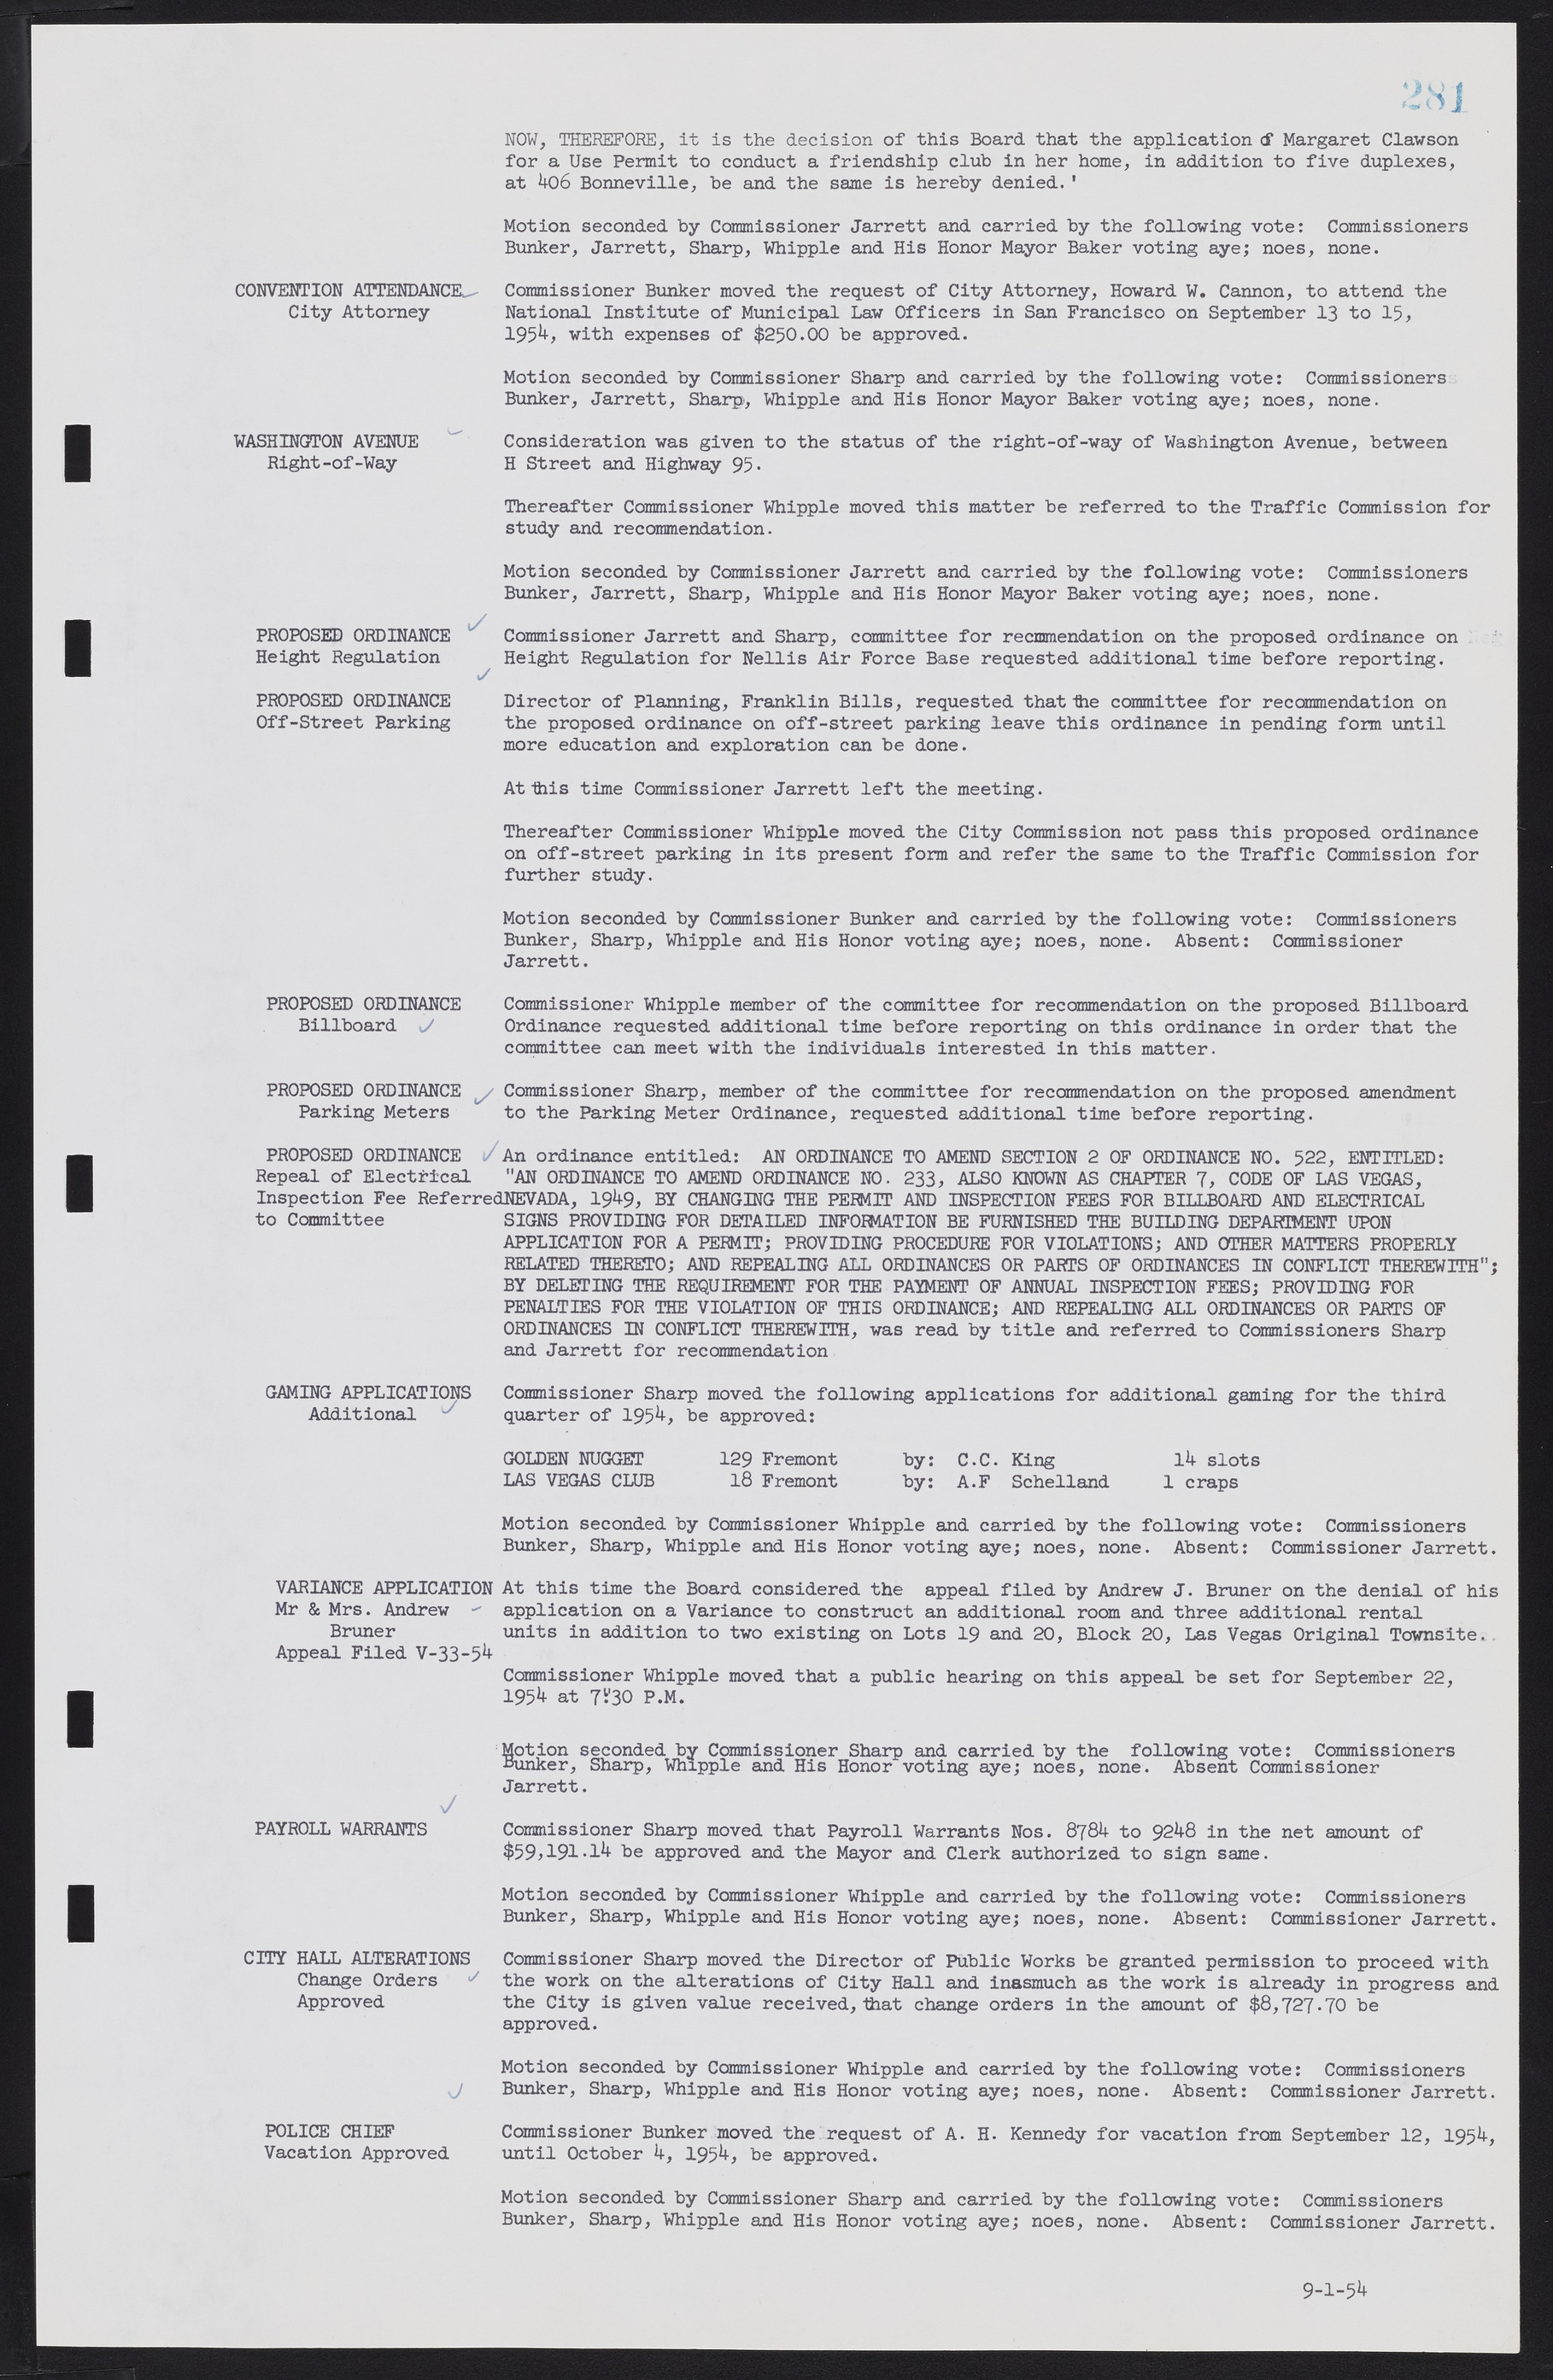 Las Vegas City Commission Minutes, February 17, 1954 to September 21, 1955, lvc000009-287